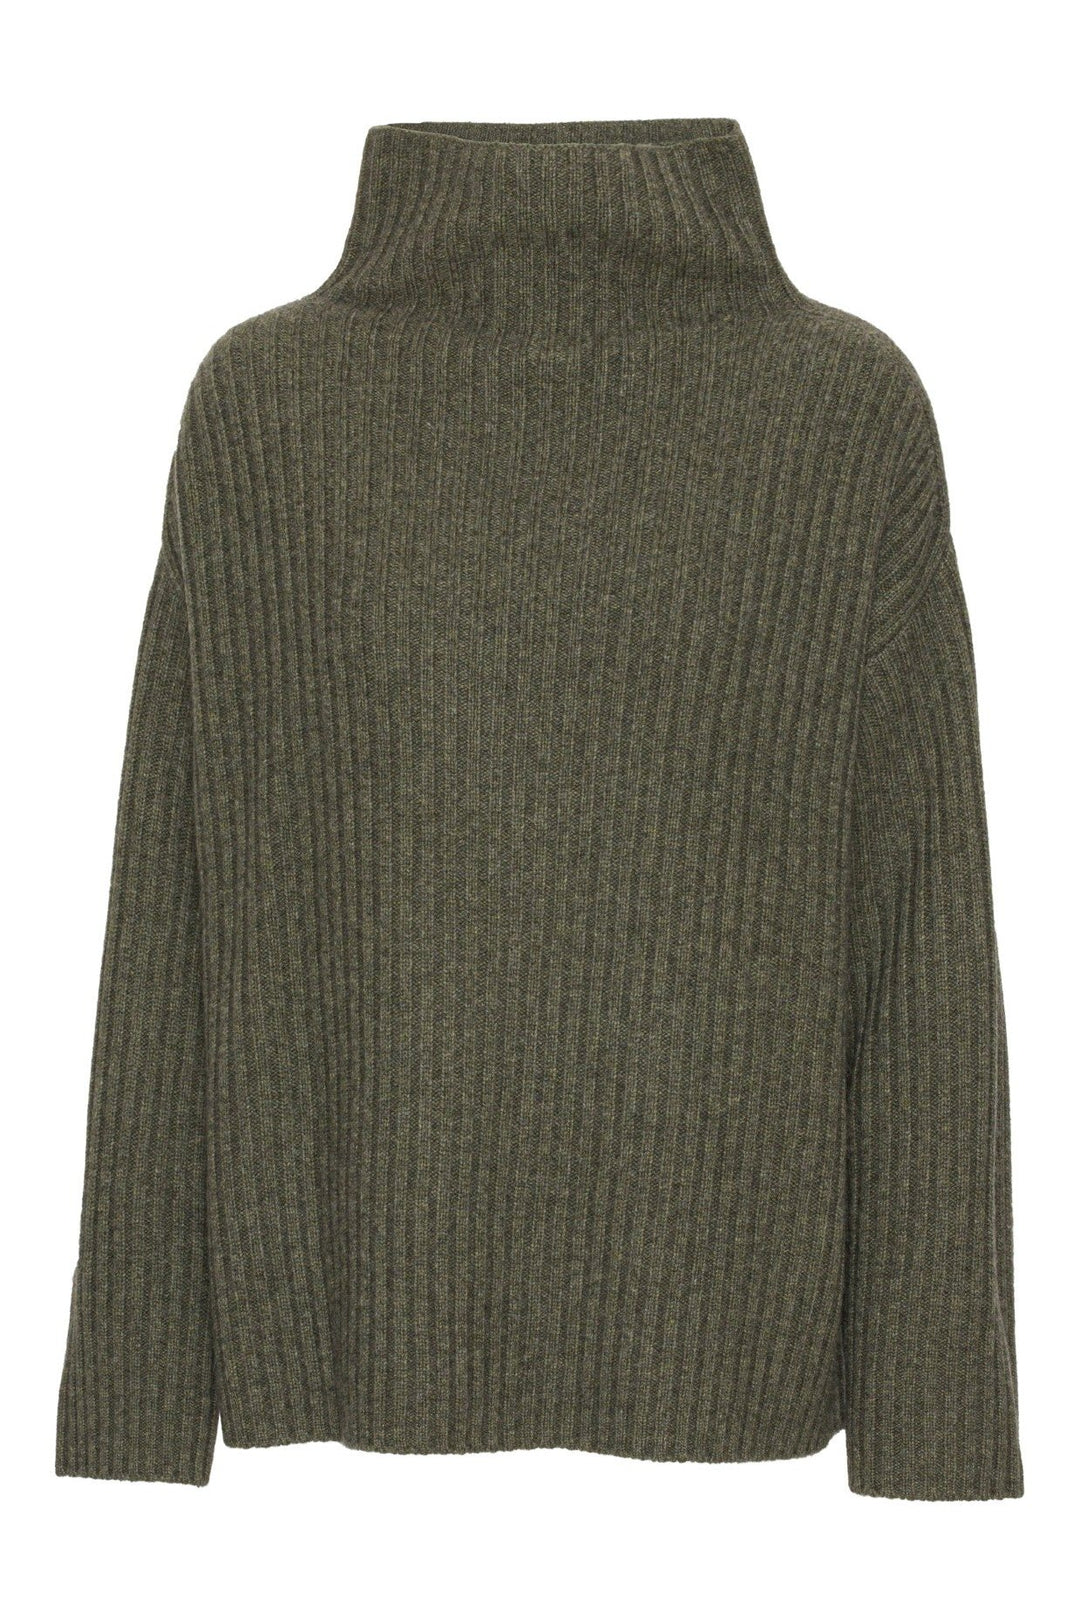 Sweater | BETA STUDIOS Gine Turtle Neck, army melange